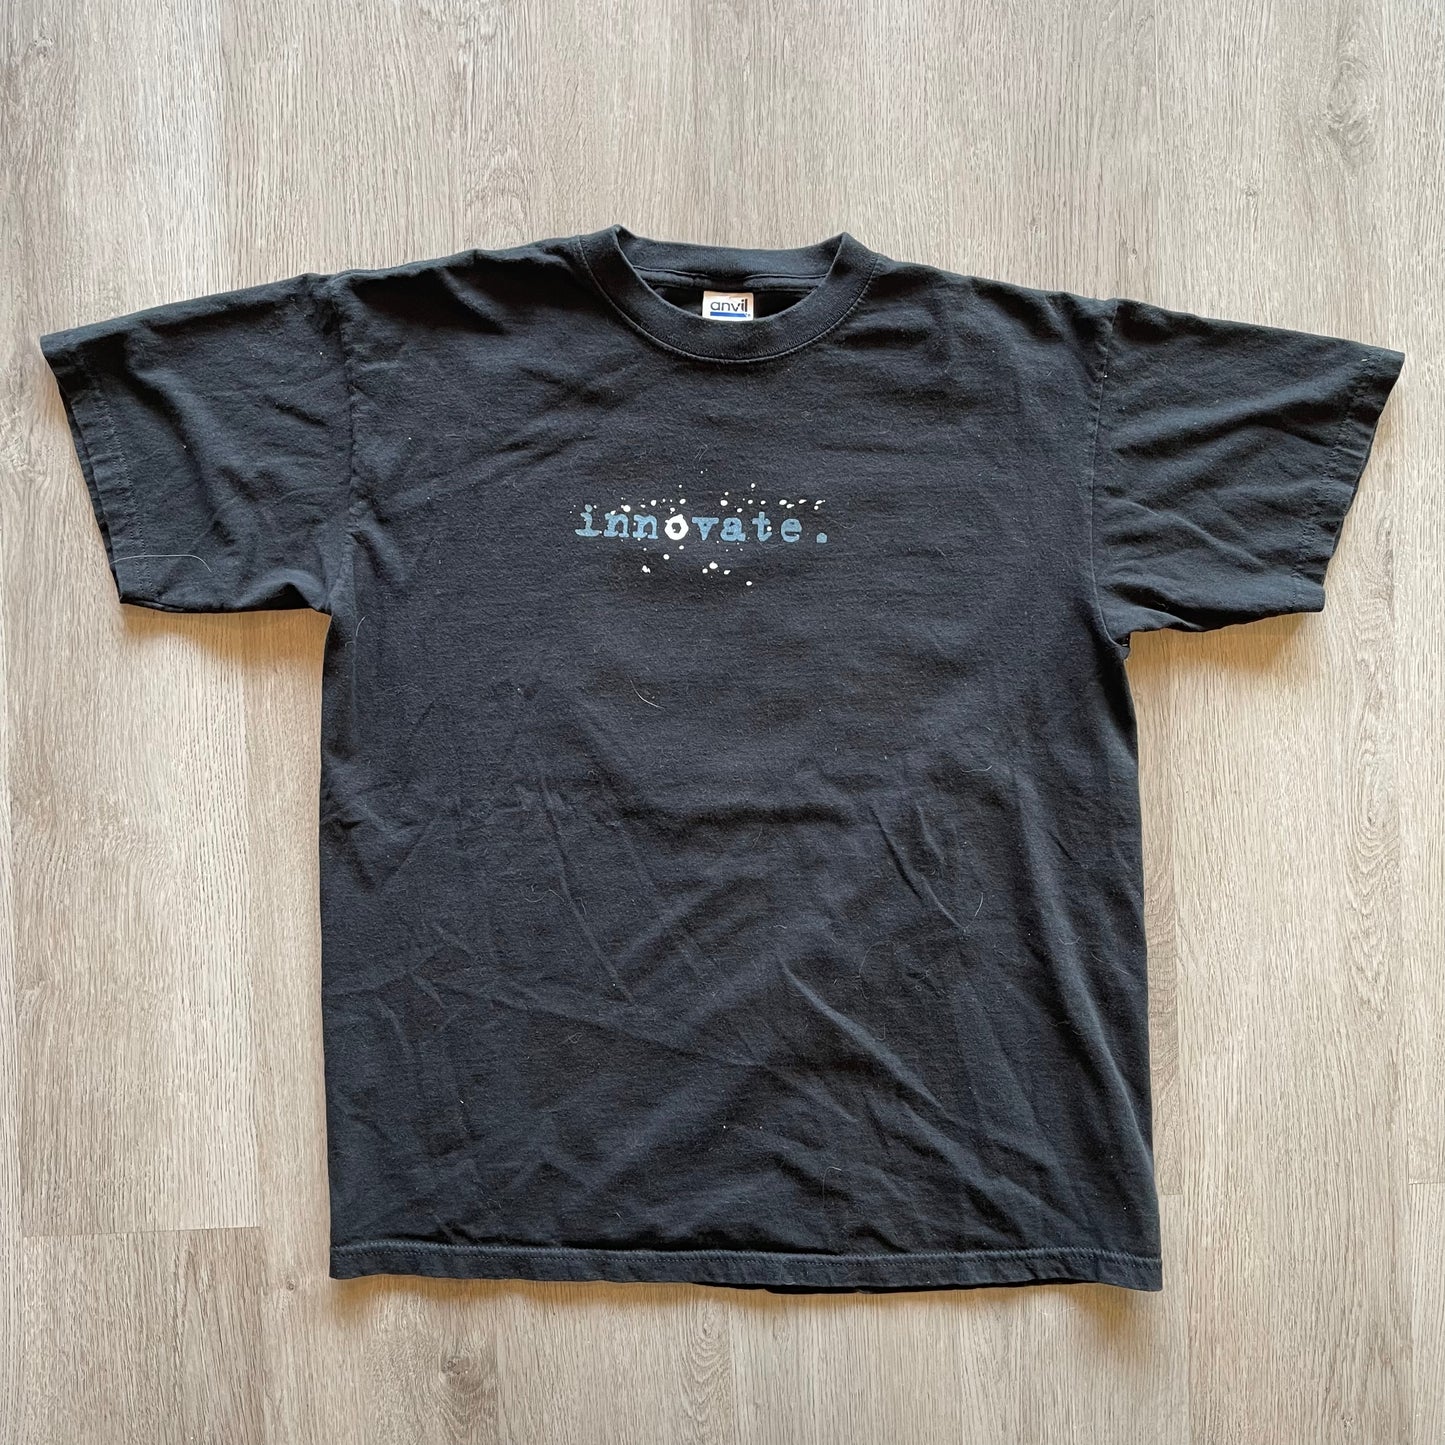 We Innovate Vintage T-shirt